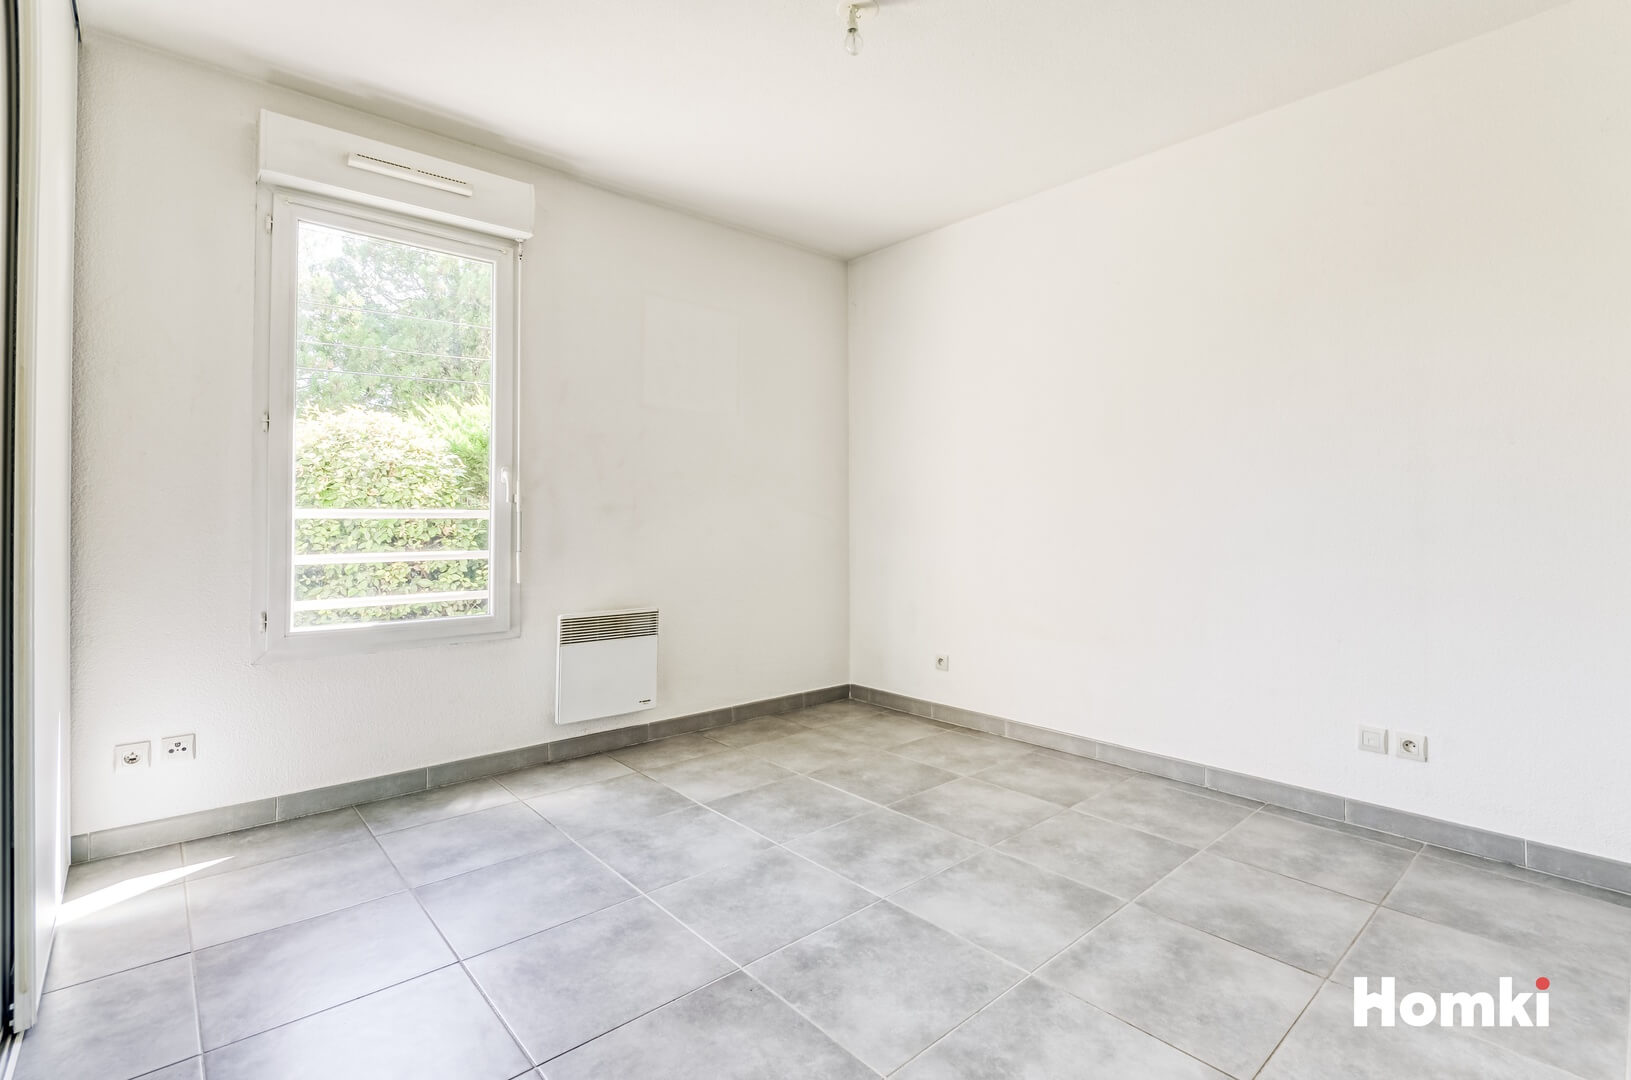 Homki - Vente Appartement  de 39.0 m² à Gardanne 13120